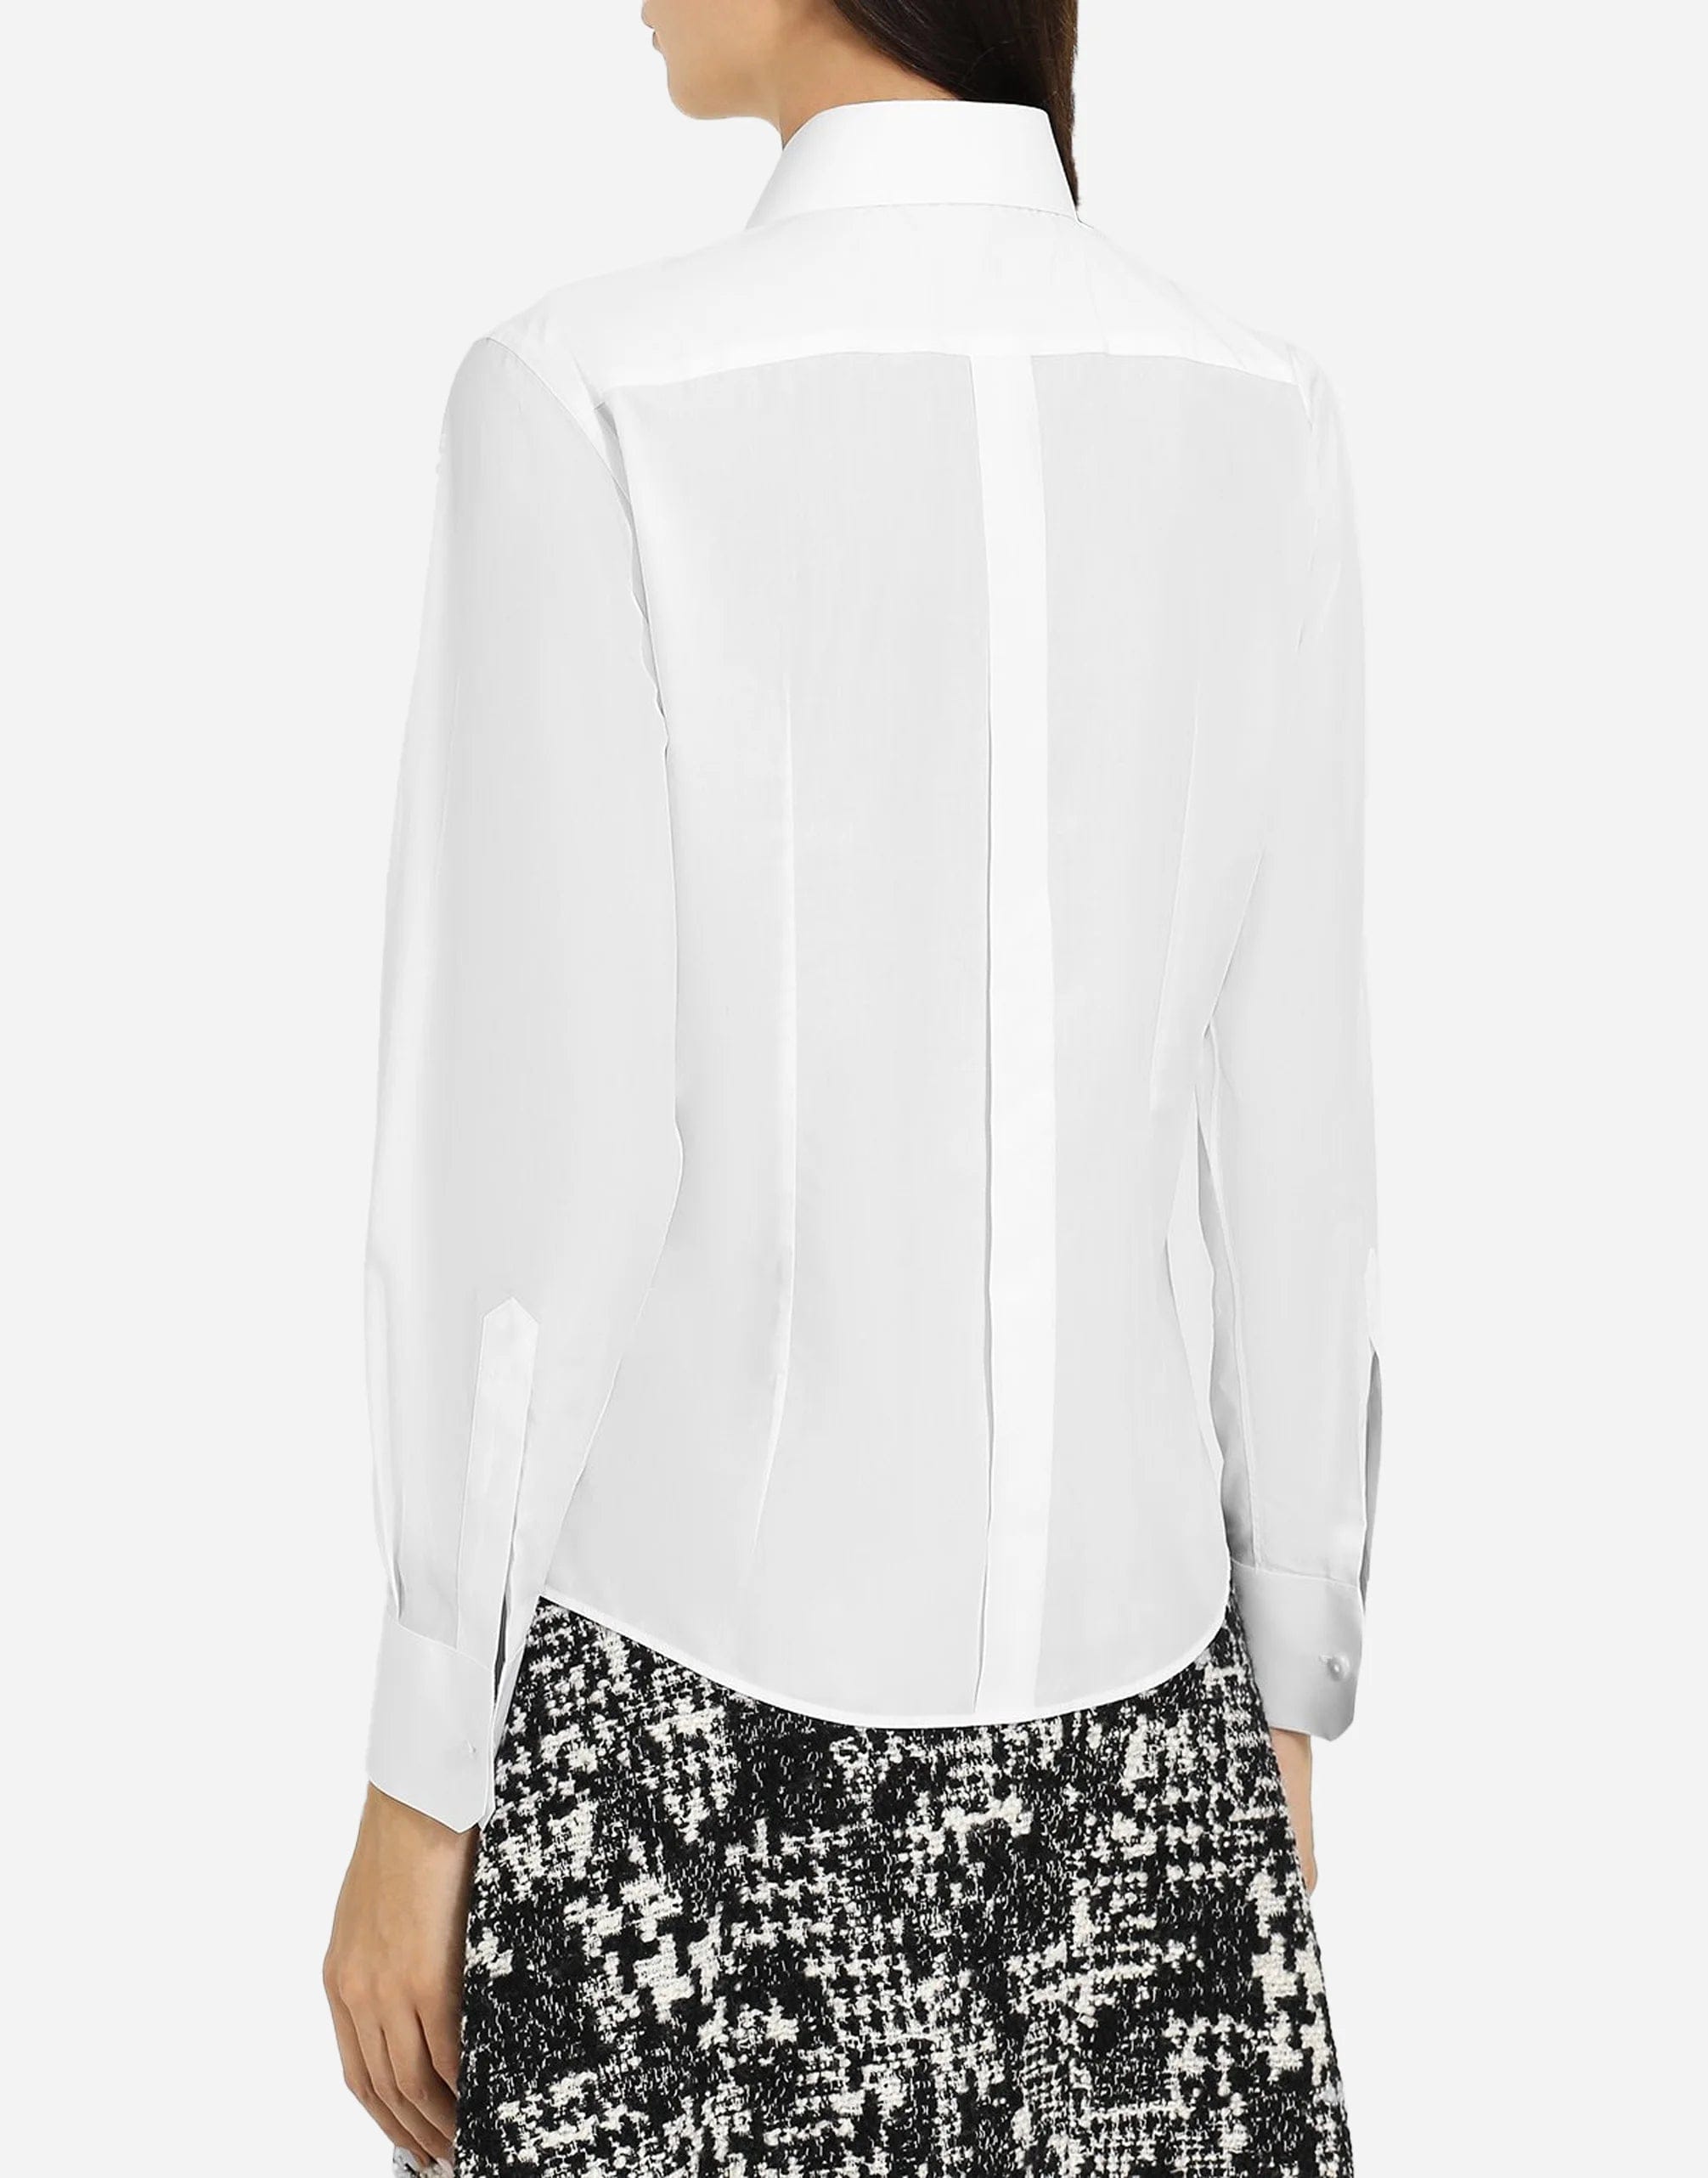 Dolce & Gabbana White Cotton Collared Long Sleeves Shirt Top